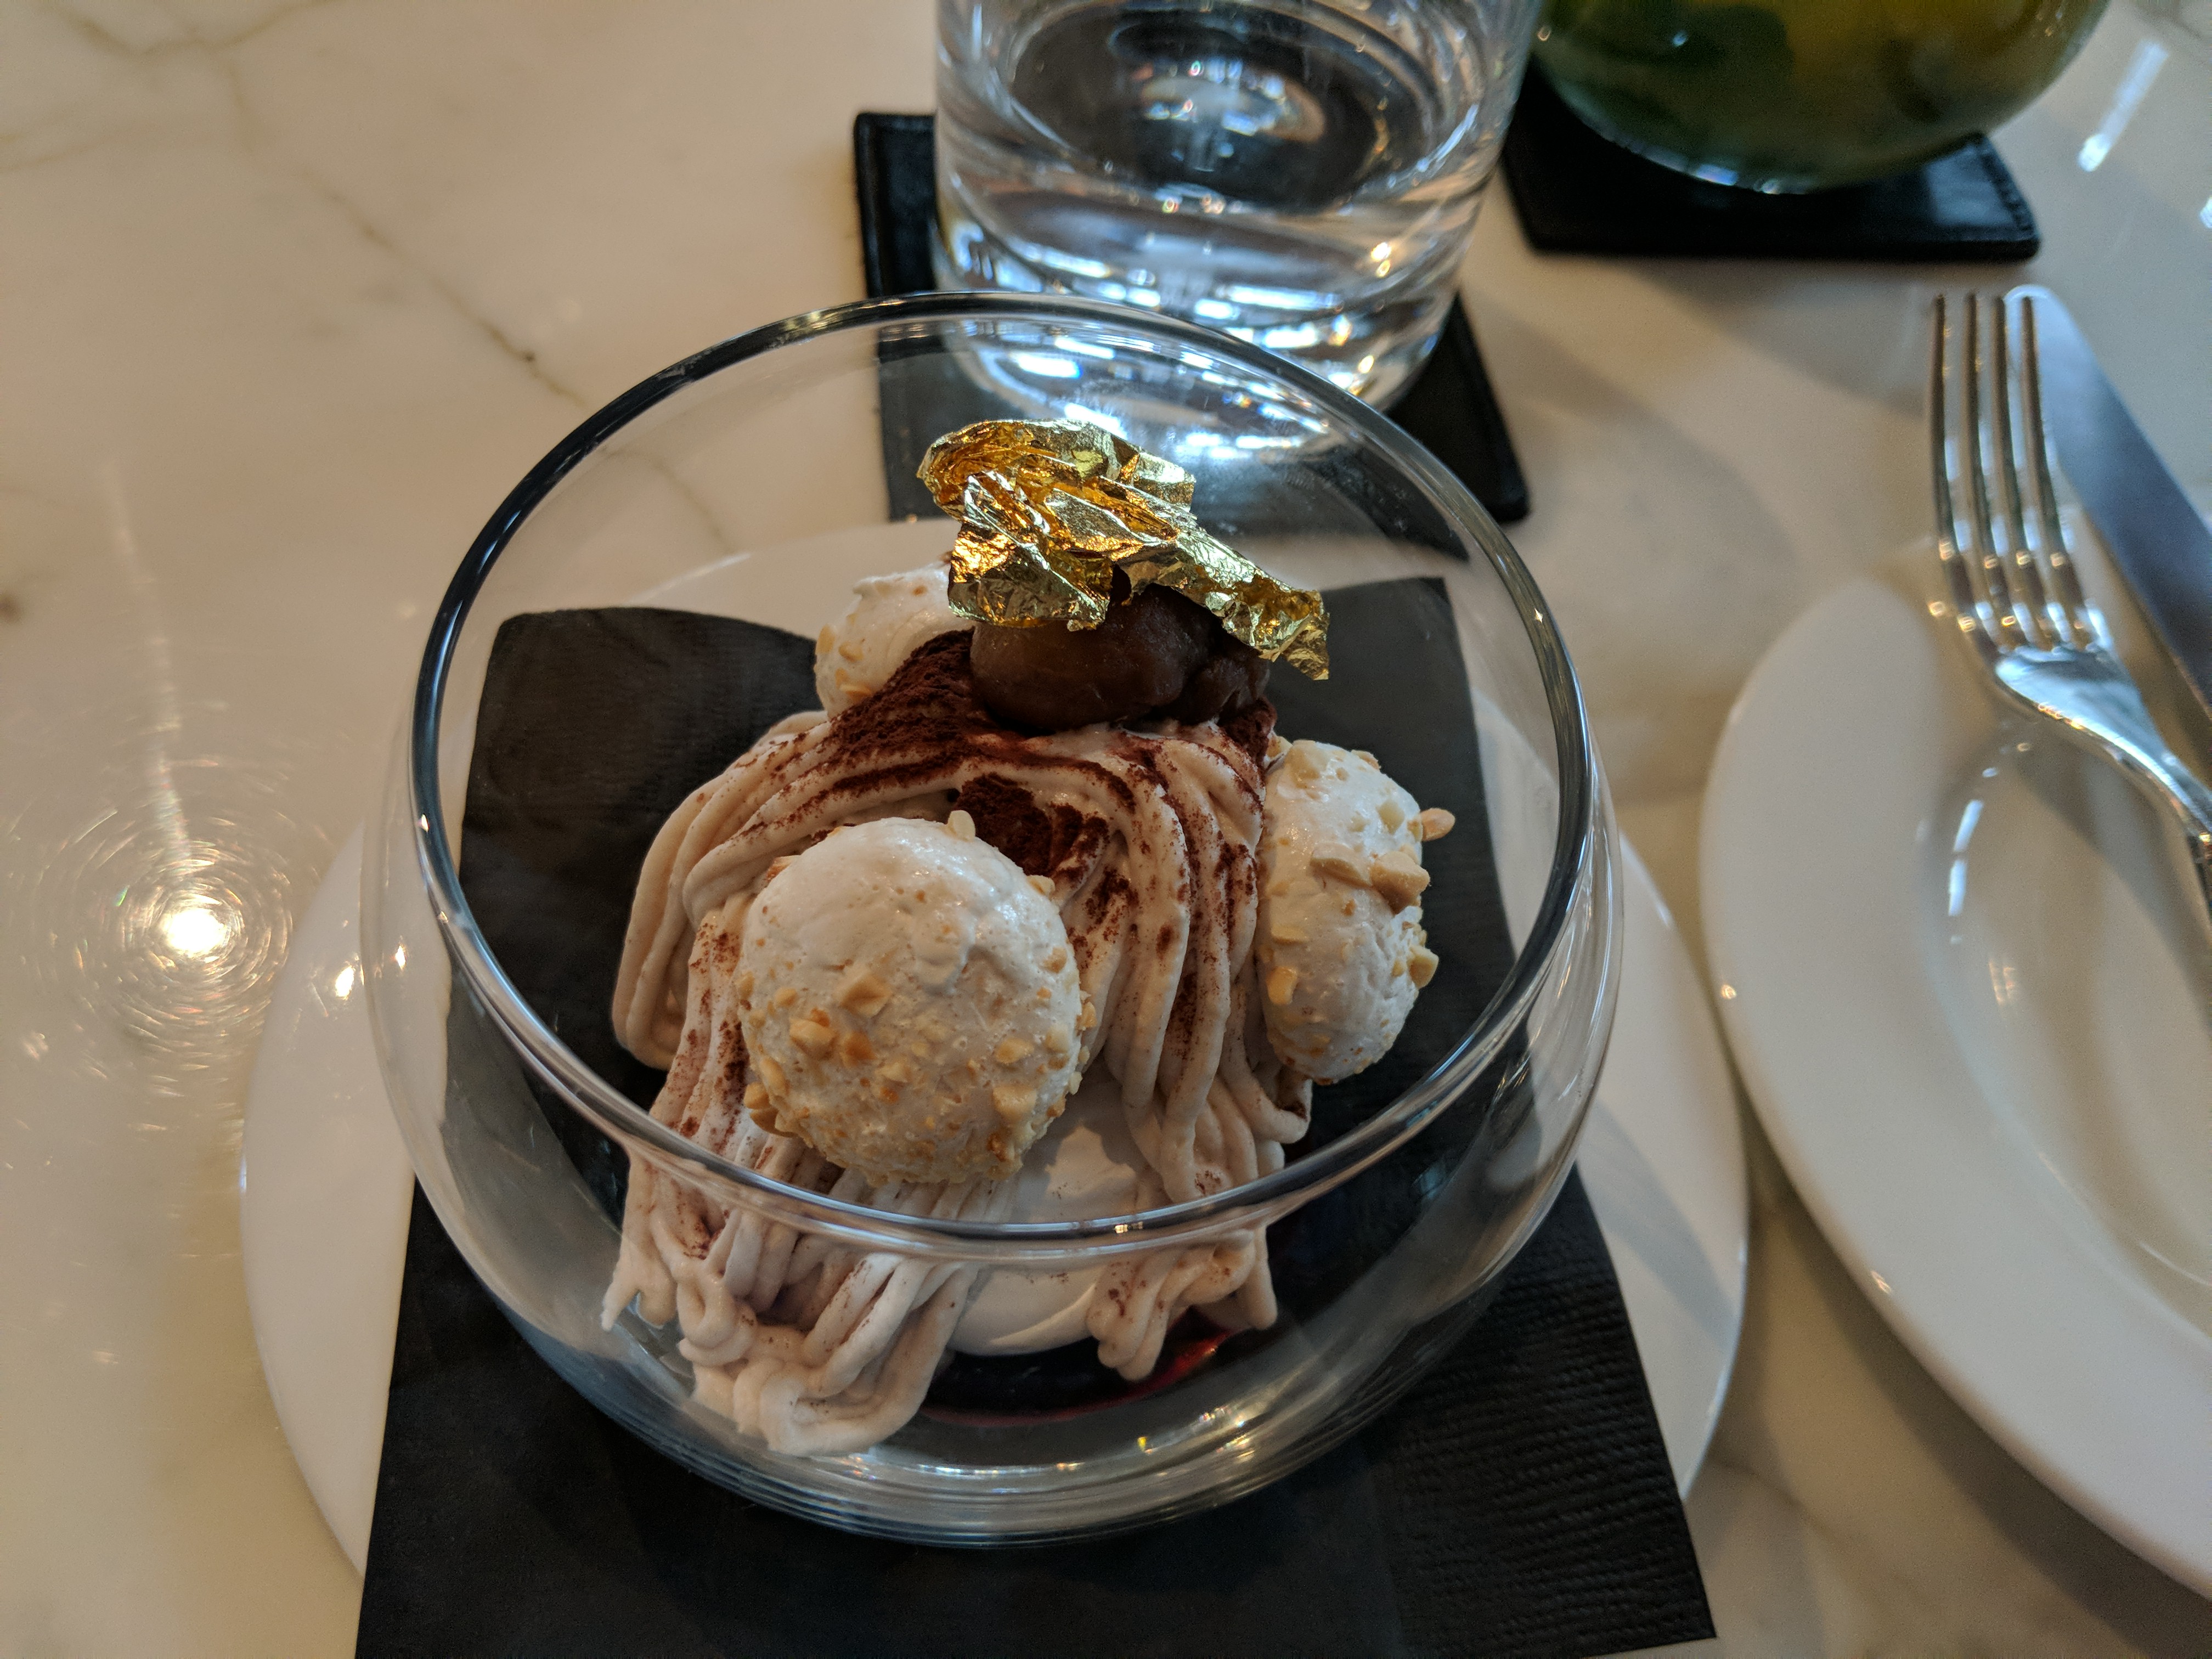 Seri's $20 chestnut dessert, complete with gold flake